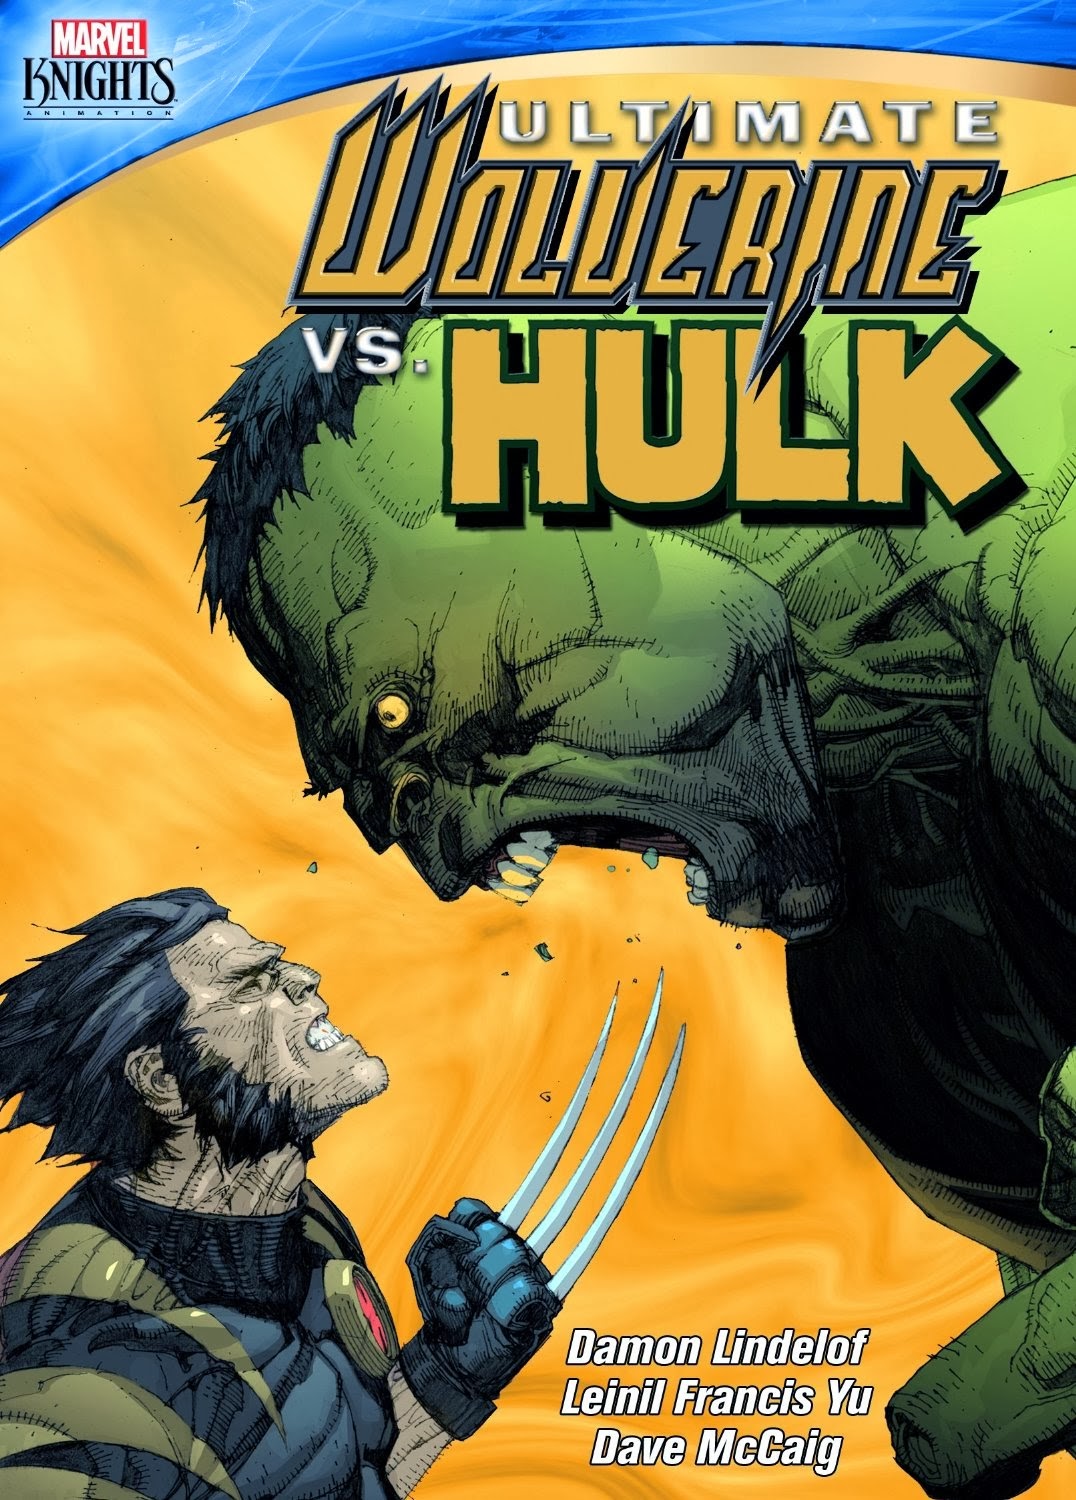 http://superheroesrevelados.blogspot.com.ar/2014/01/wolverine-vs-hulk.html